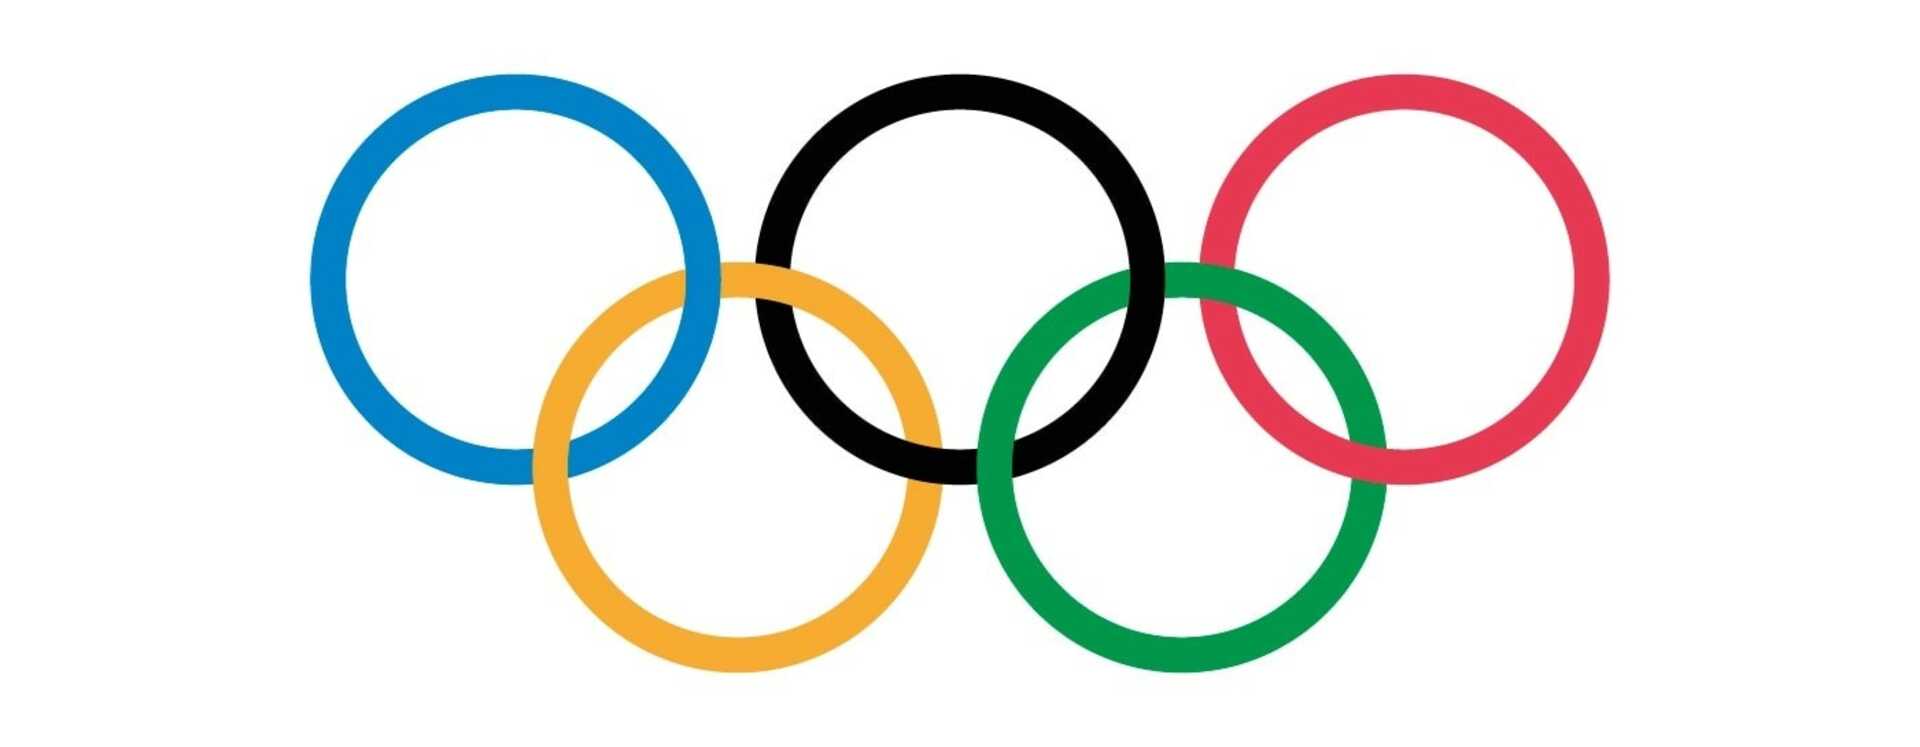 Кольца олимпиады цвета